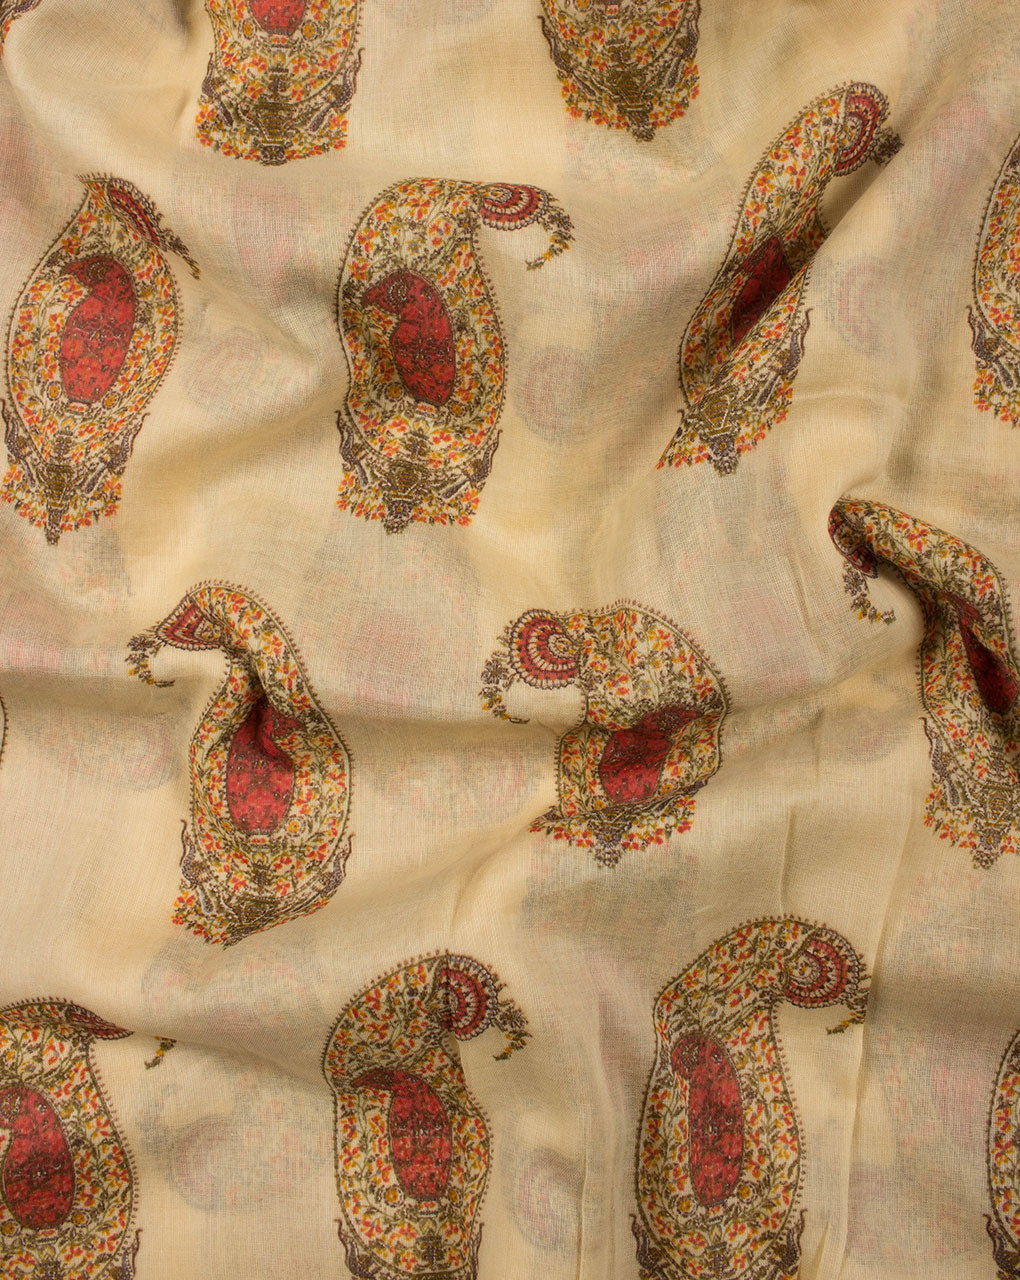 Paisley Screen Print Voil Cotton Fabric - Fabriclore.com